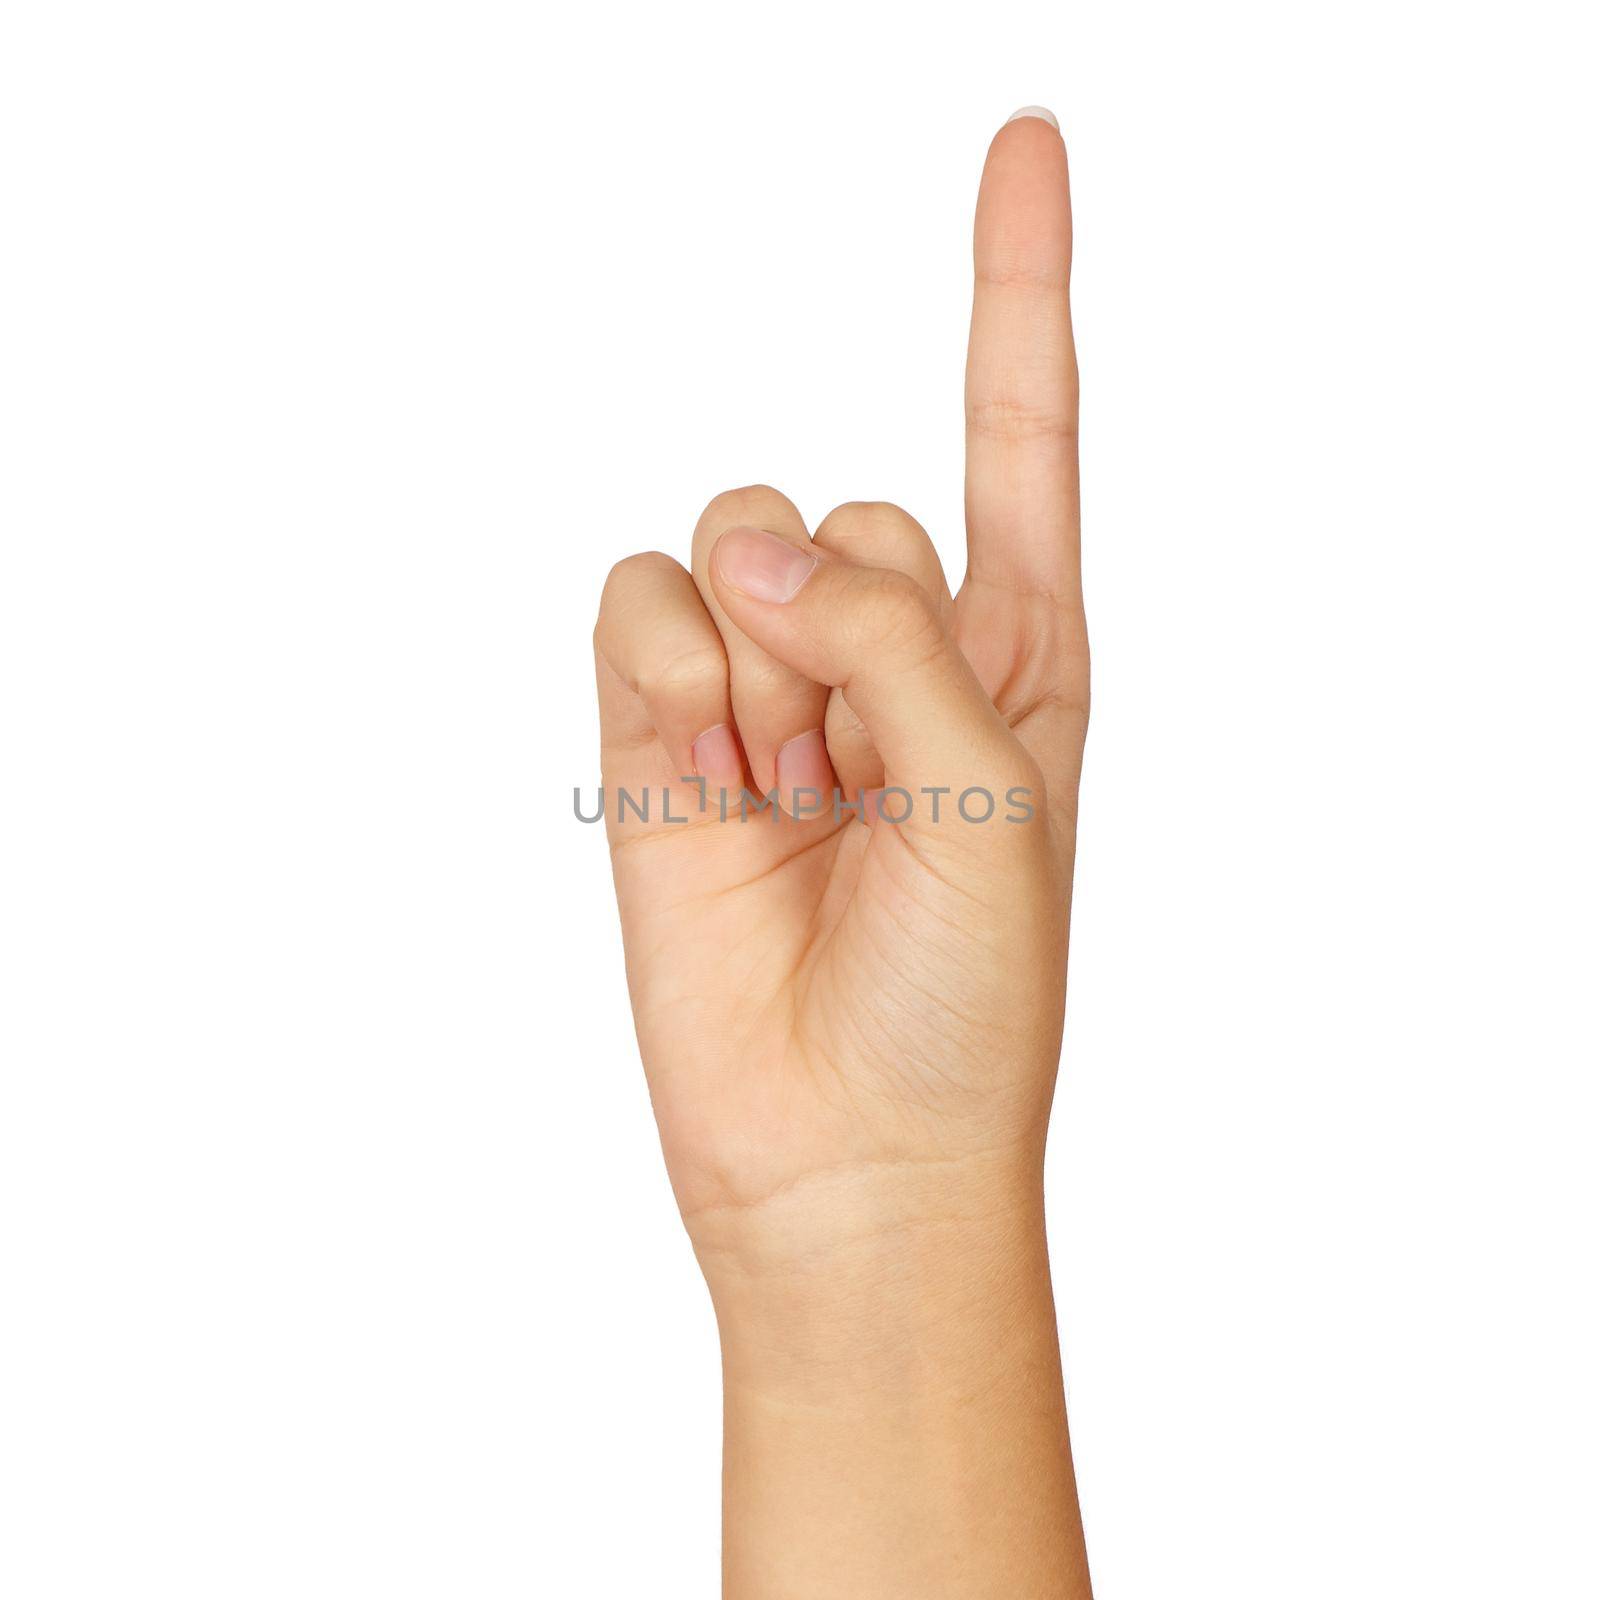 american sign language number 1 by raddnatt